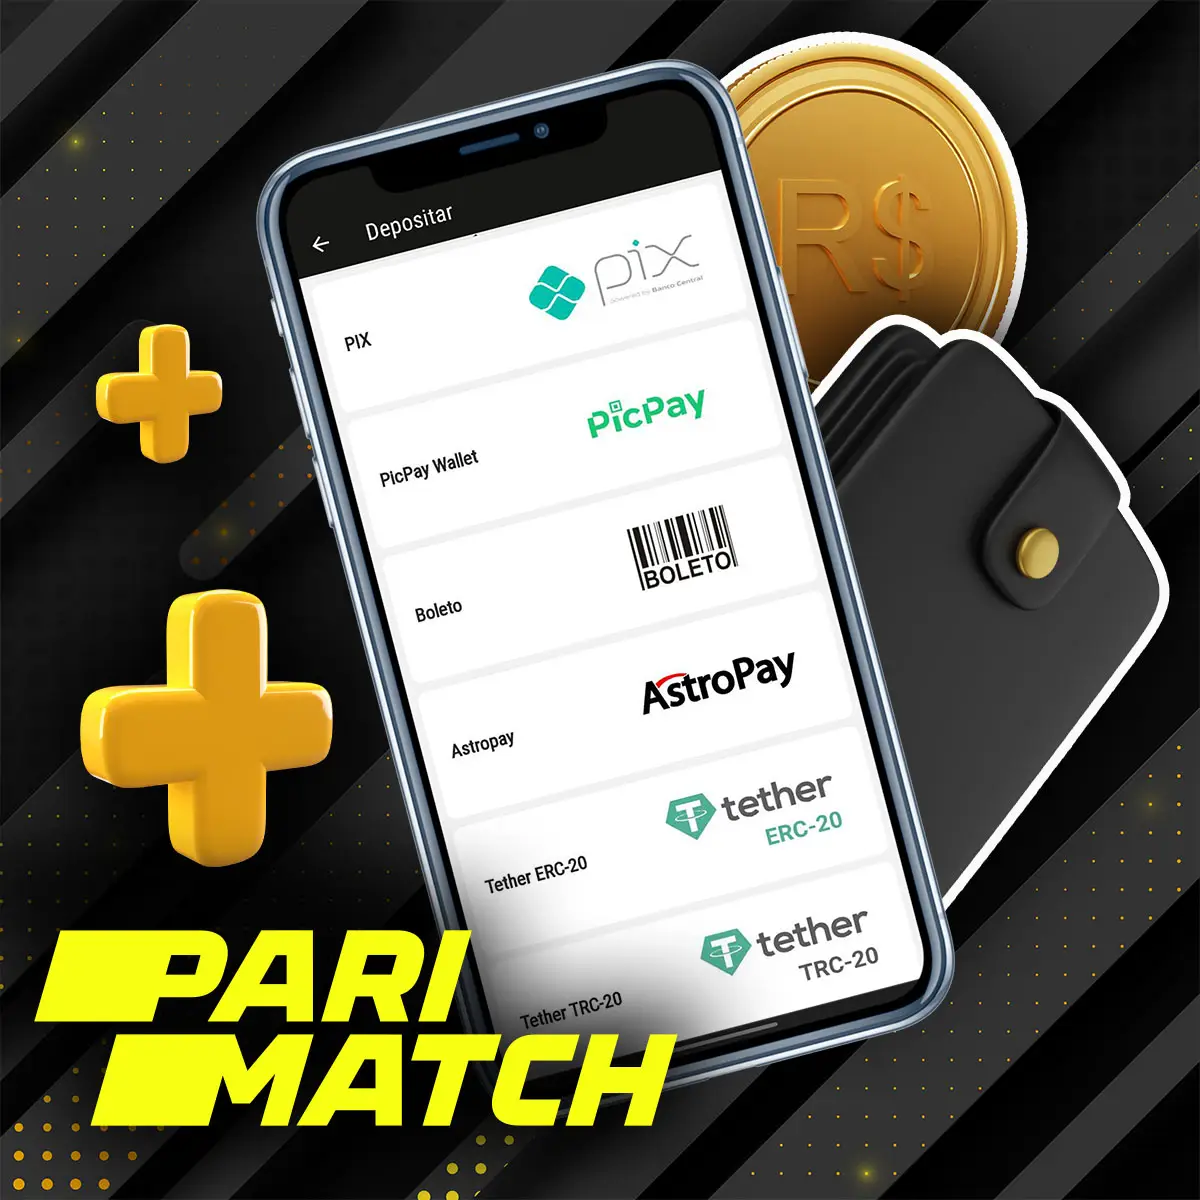 Métodos de pagamento no aplicativo Parimatch no Brasil